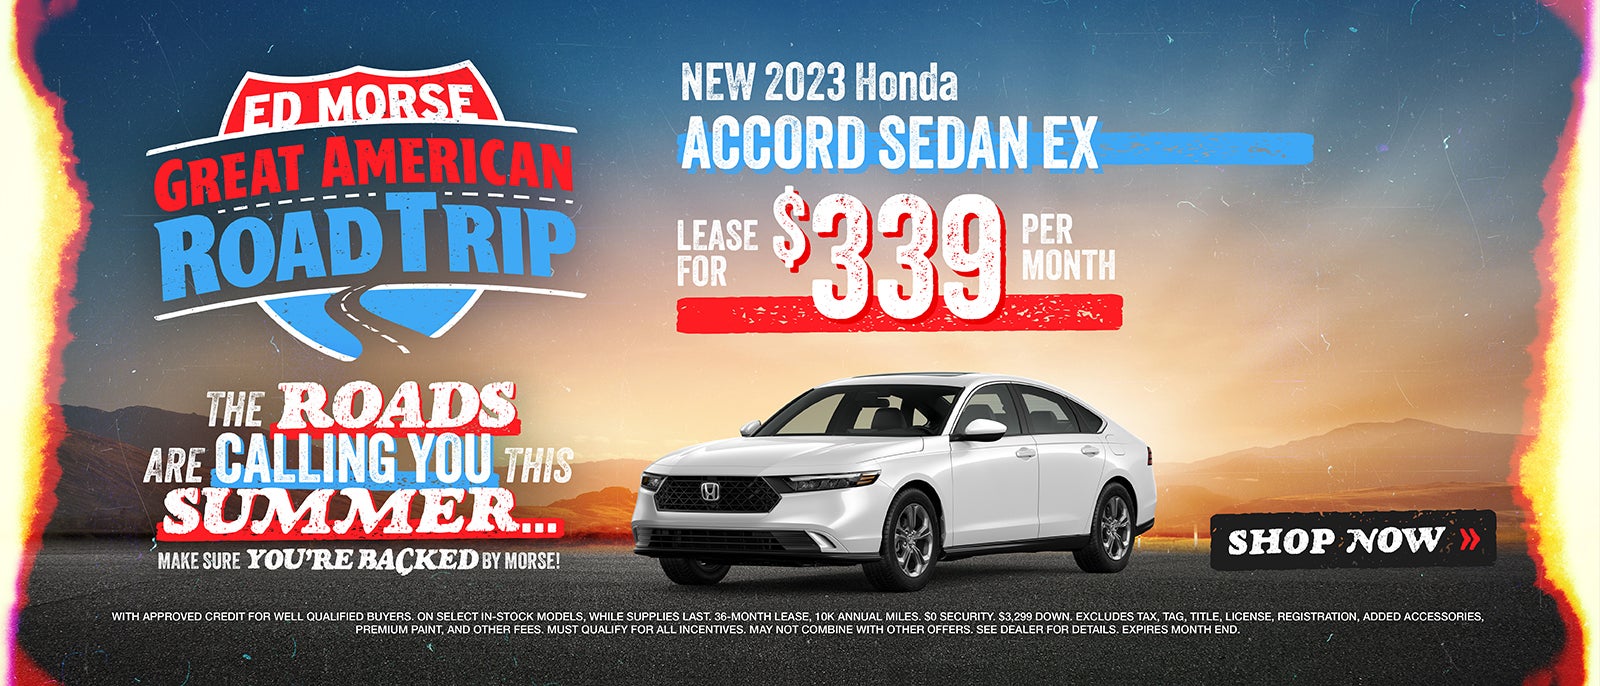 New 2023 Honda Accord Sedan EX lease for $339 per month